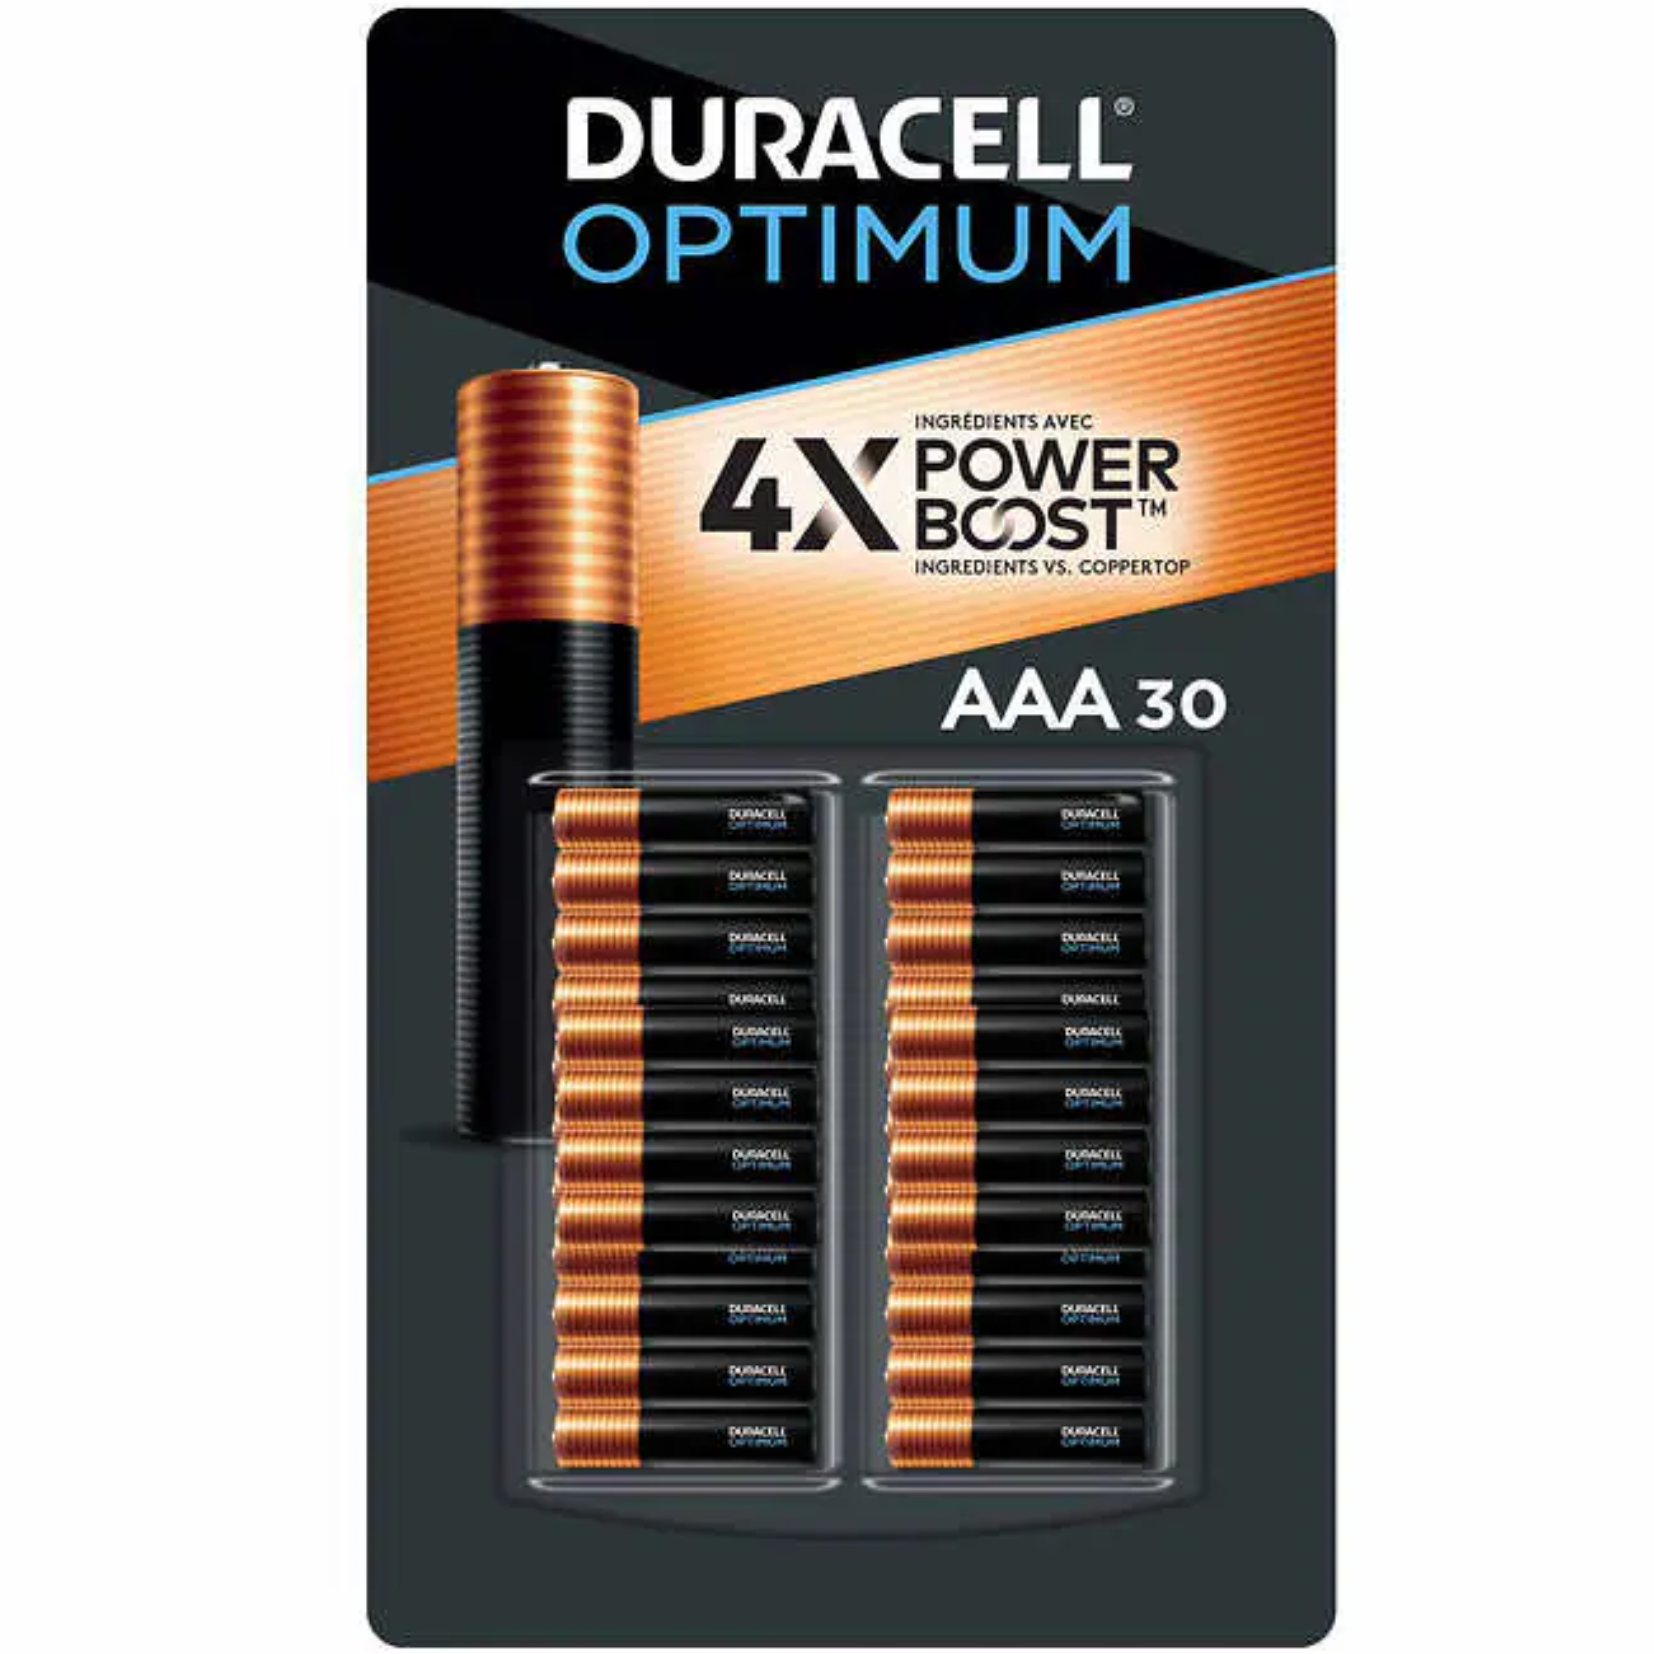 Duracell Optimum AAA Batteries 30ct